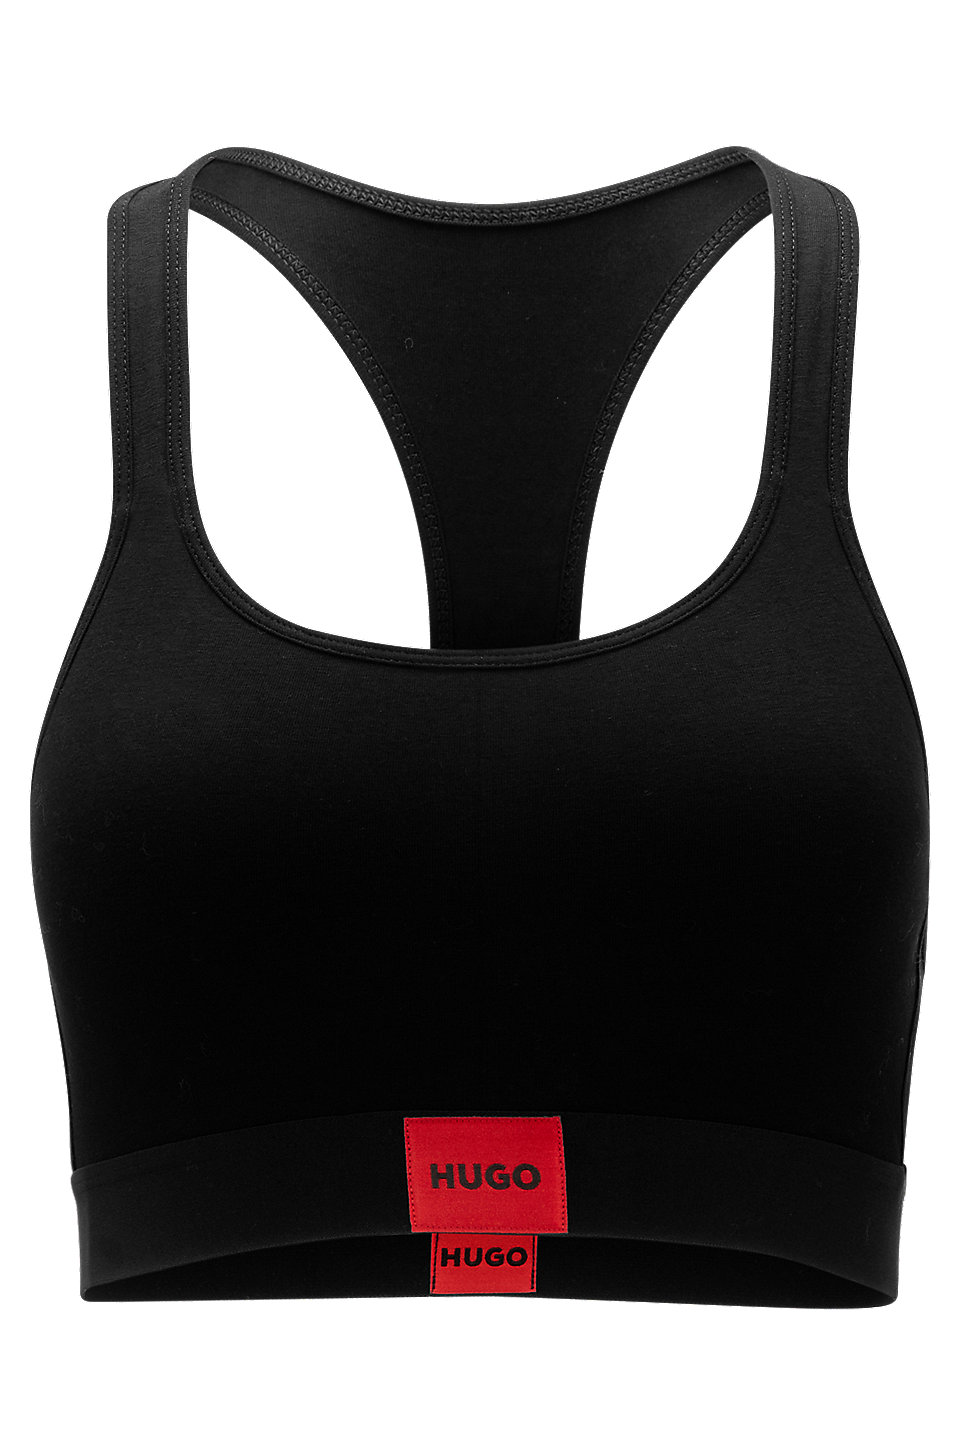 HUGO - Stretch-cotton bralette with logo label